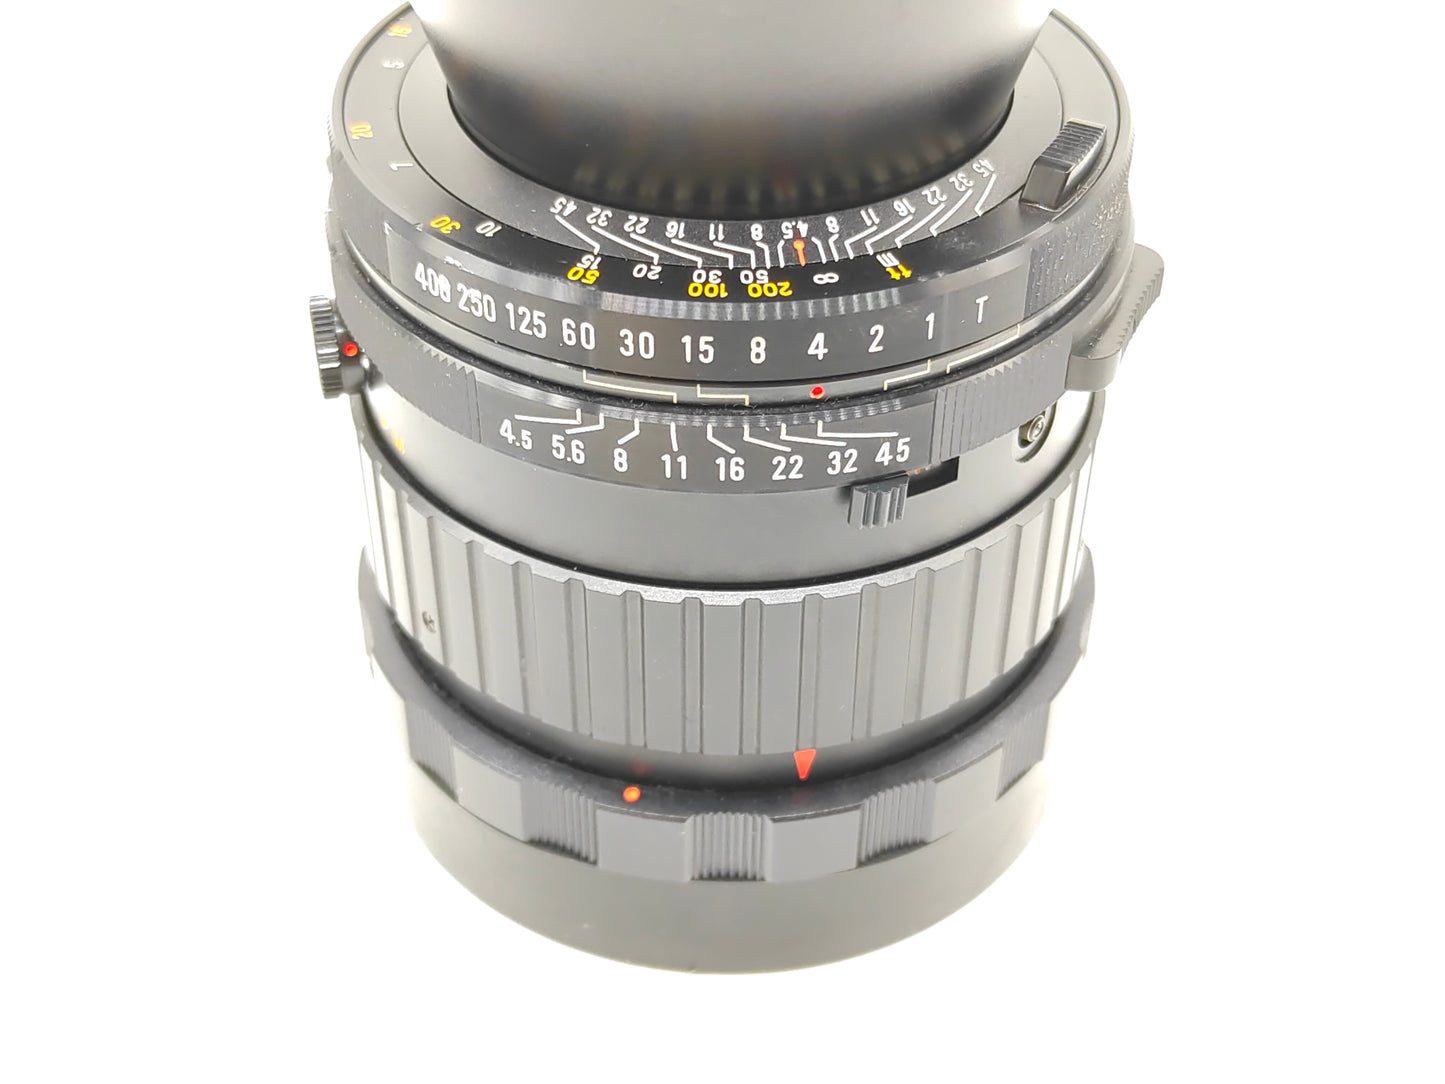 Mamiya 250mm f/4.5 lens for Mamiya RB67